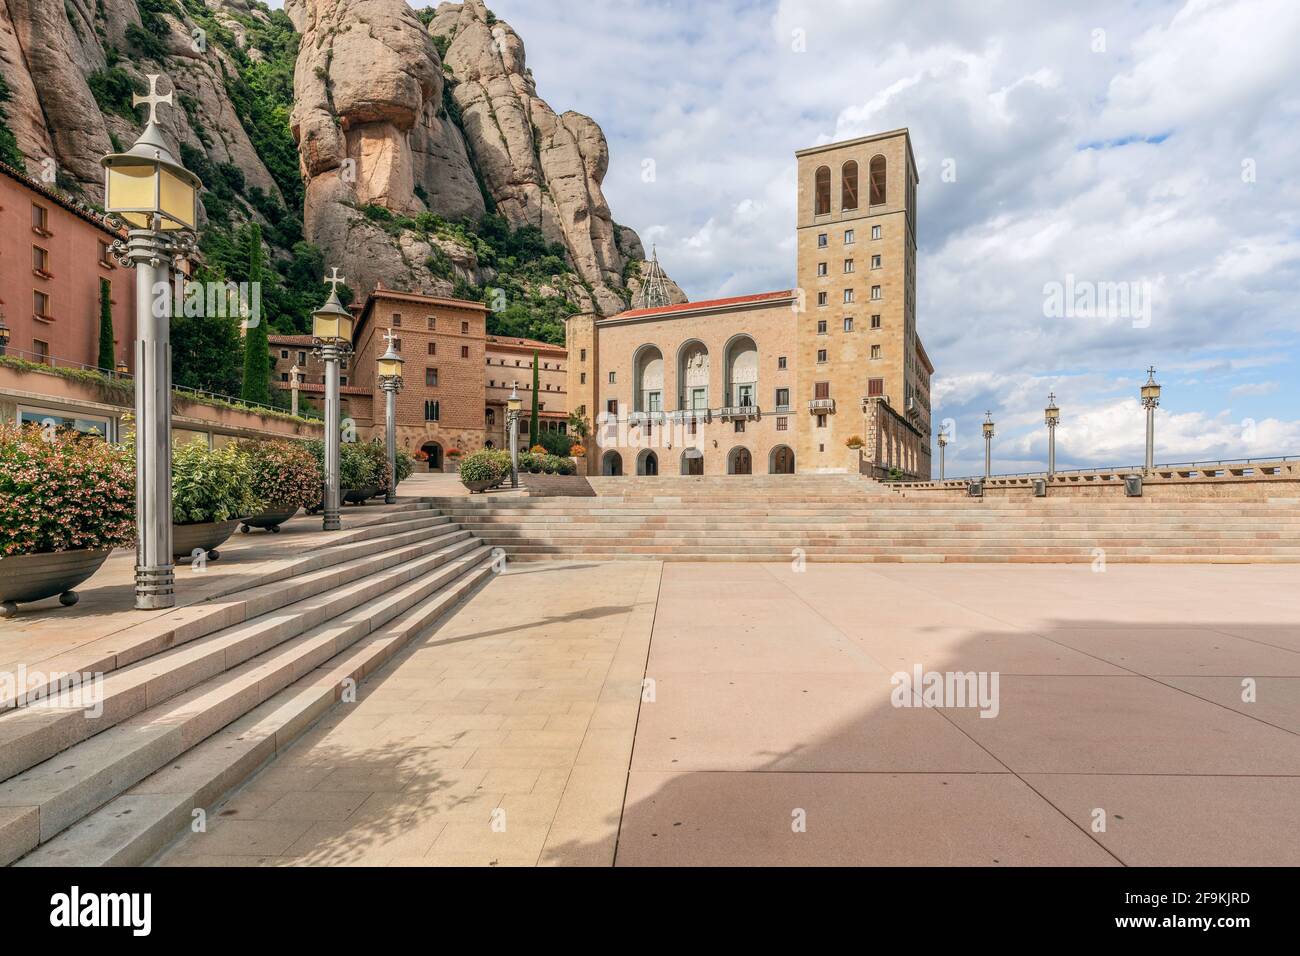 Square in front of the famous monastery Santa Maria de Montserrat Abbey. Catalonia, Spain Stock Photo